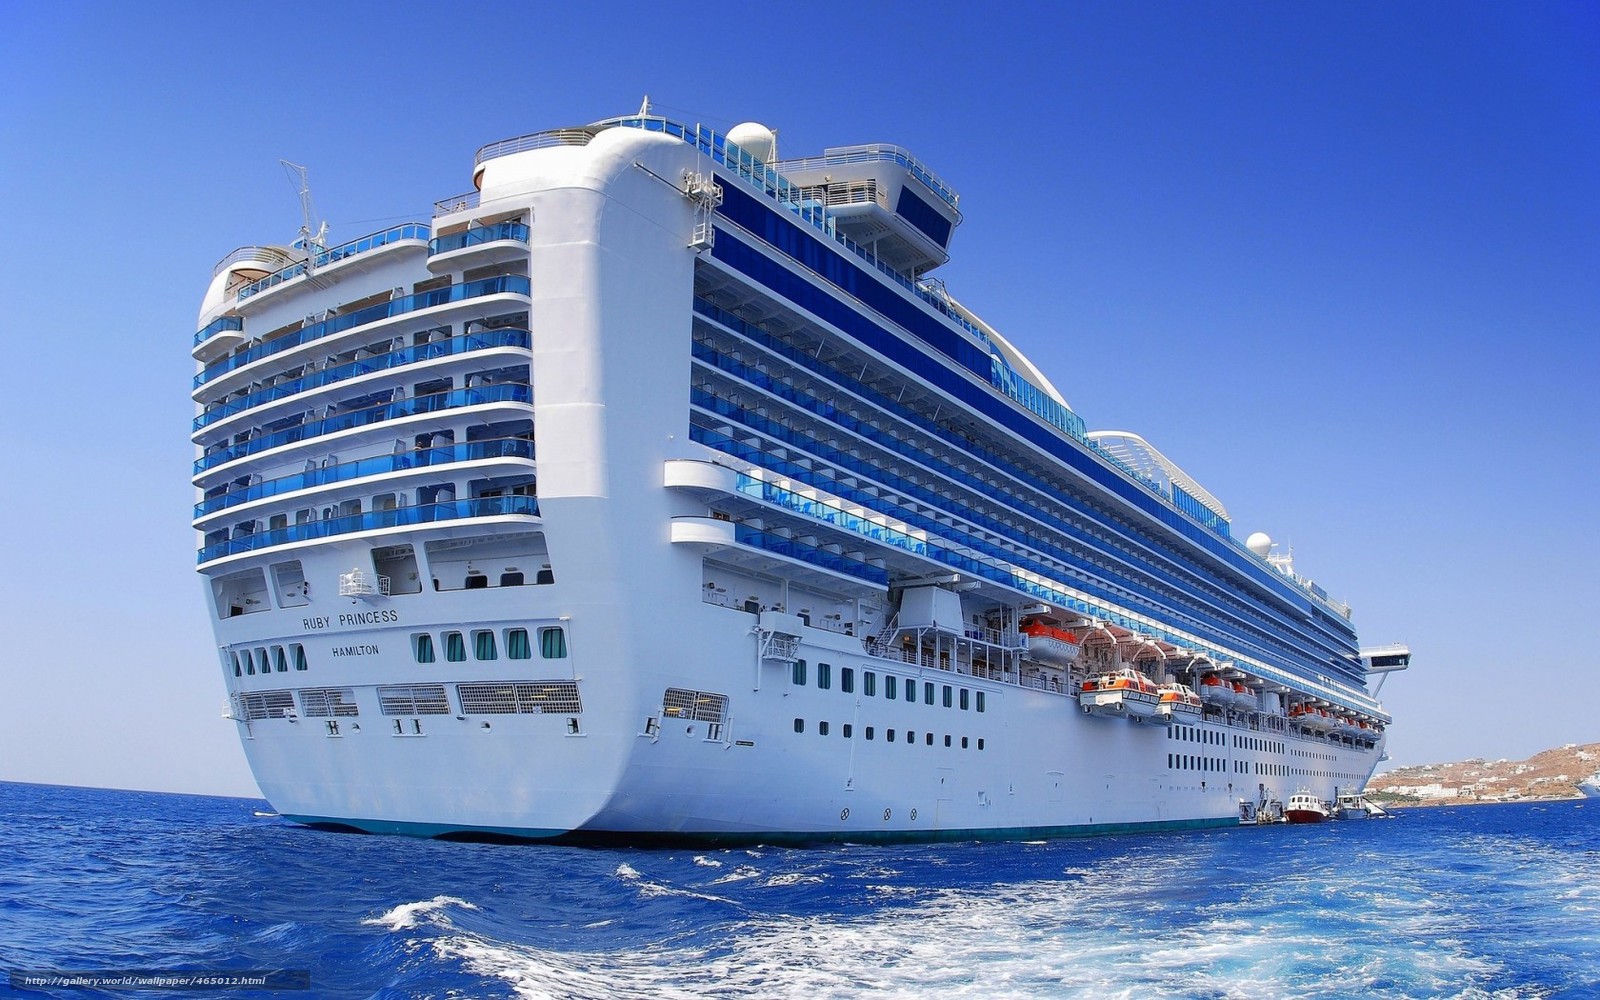 Download wallpaper ship Cruise Ship ocean desktop wallpaper in 1600x1000